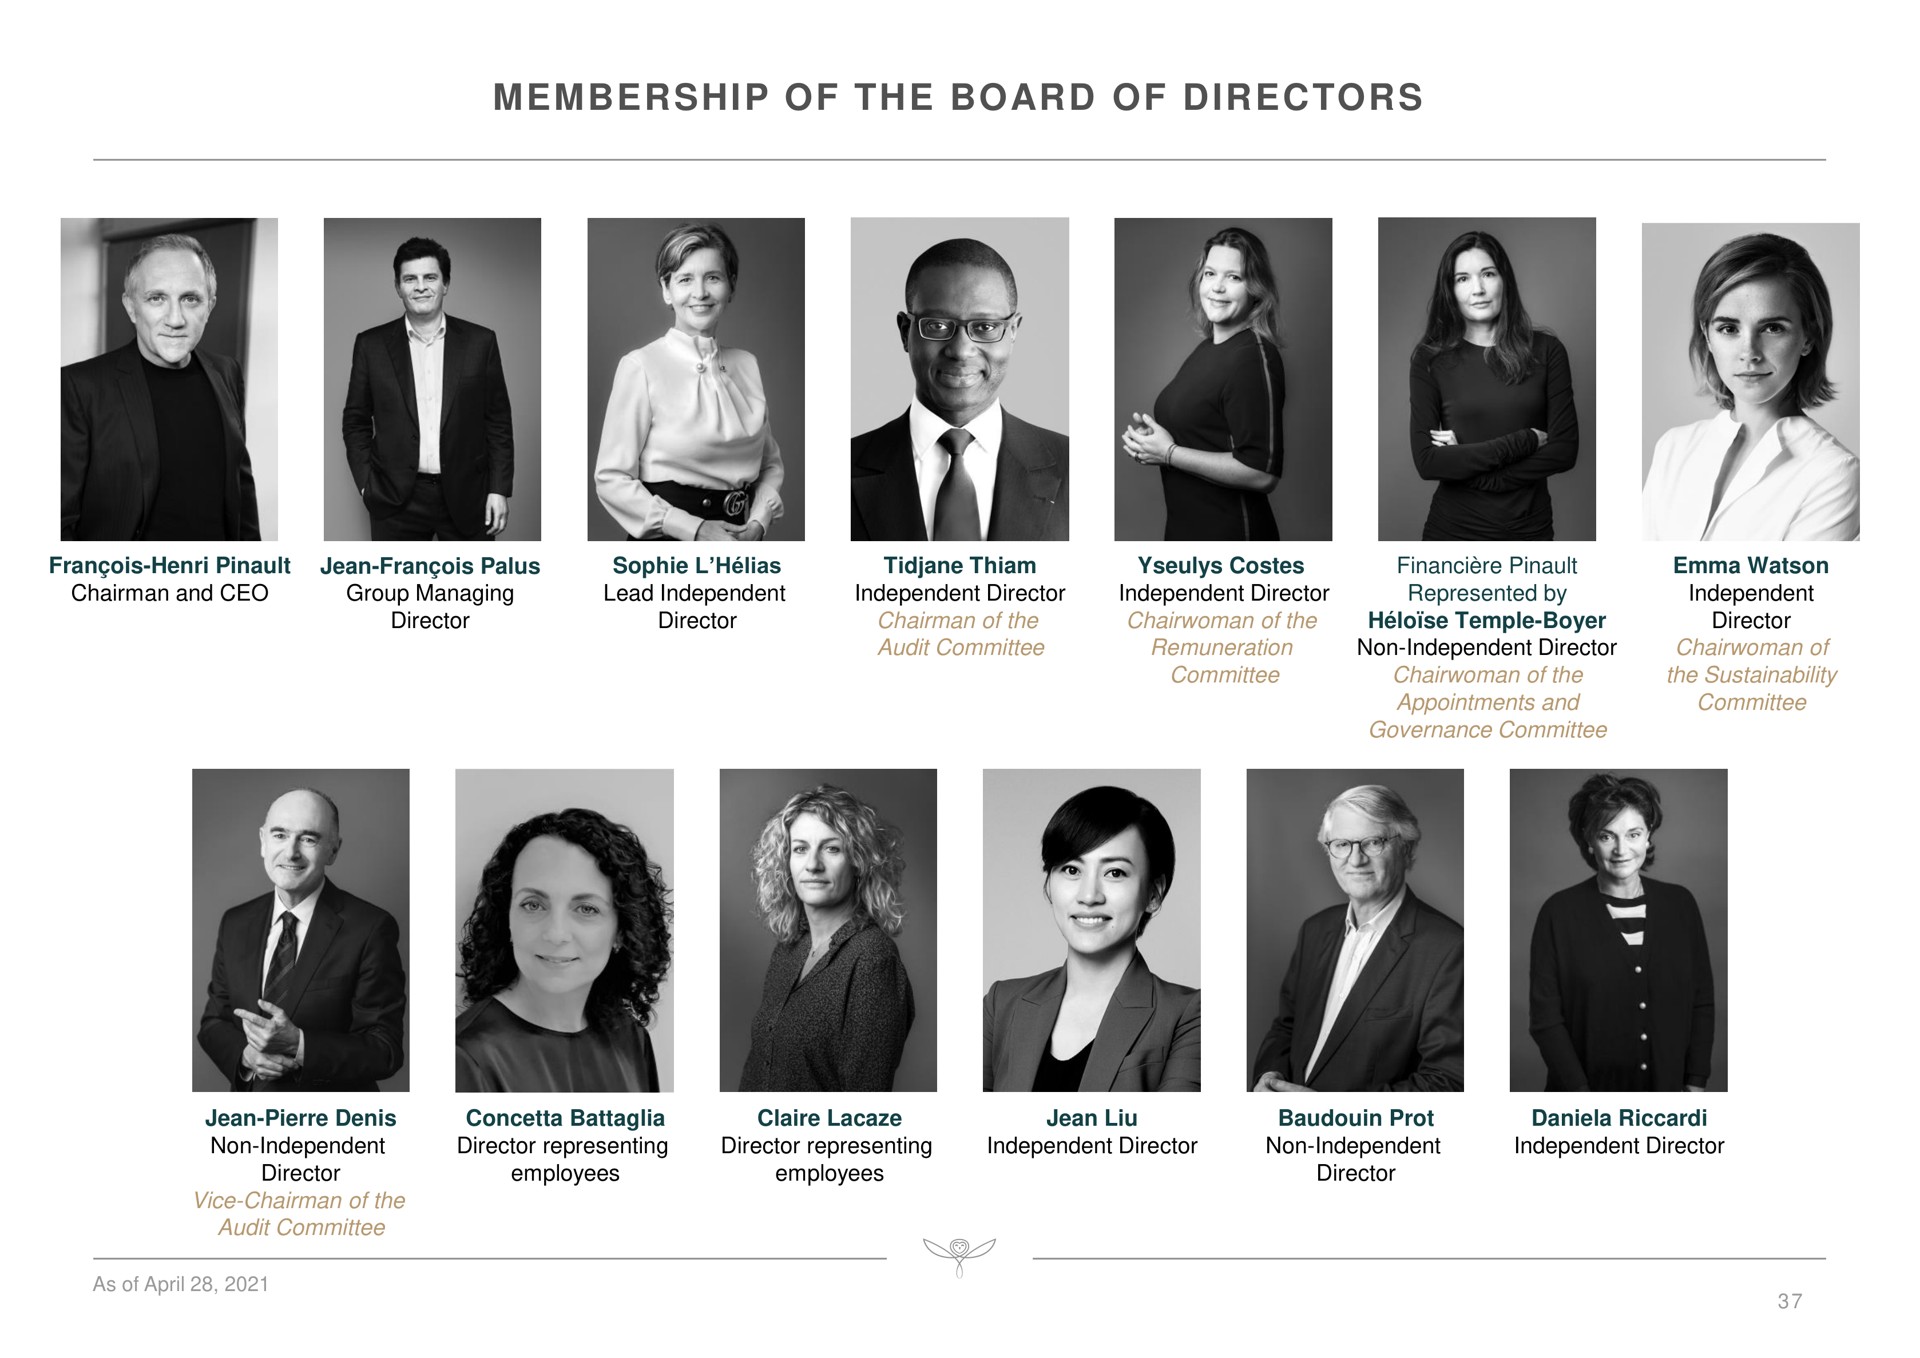 membership of the board of directors | Kering